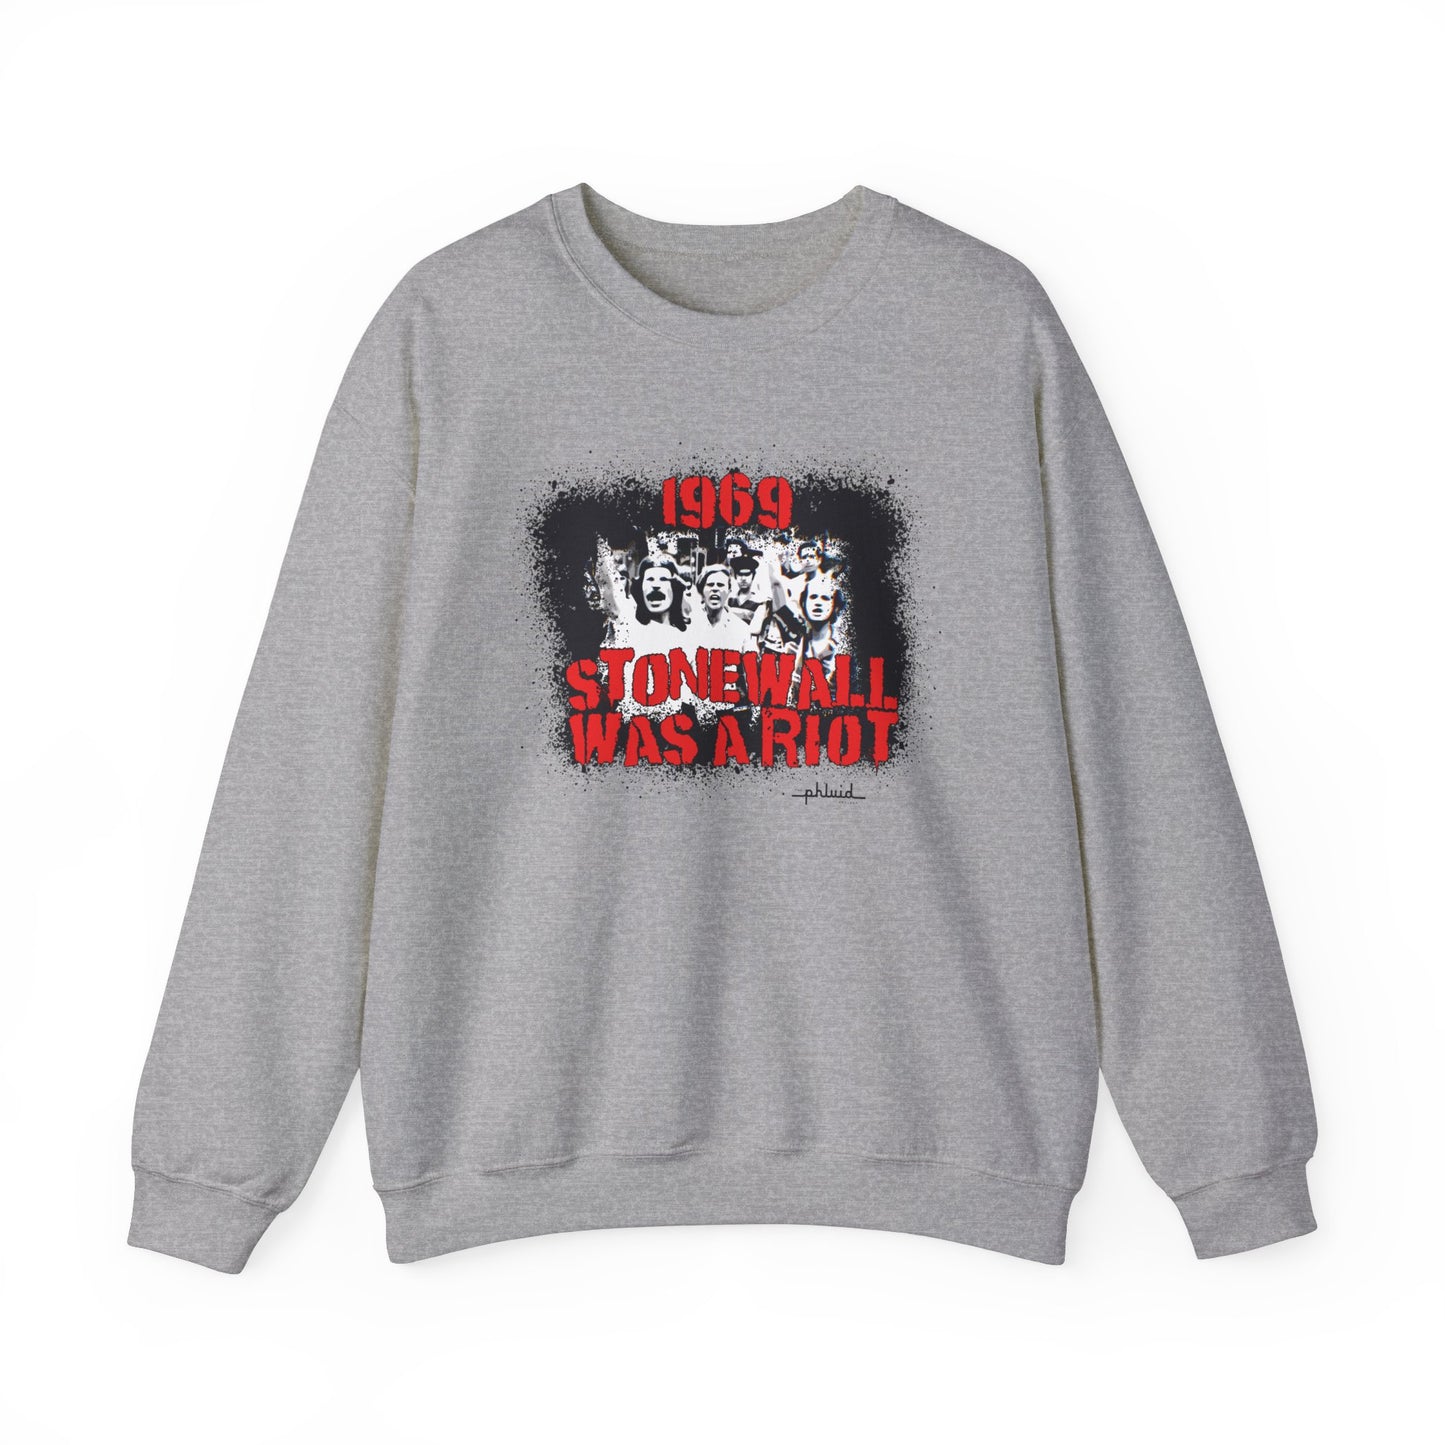 1969 Stonewall Riots Crewneck Sweatshirt